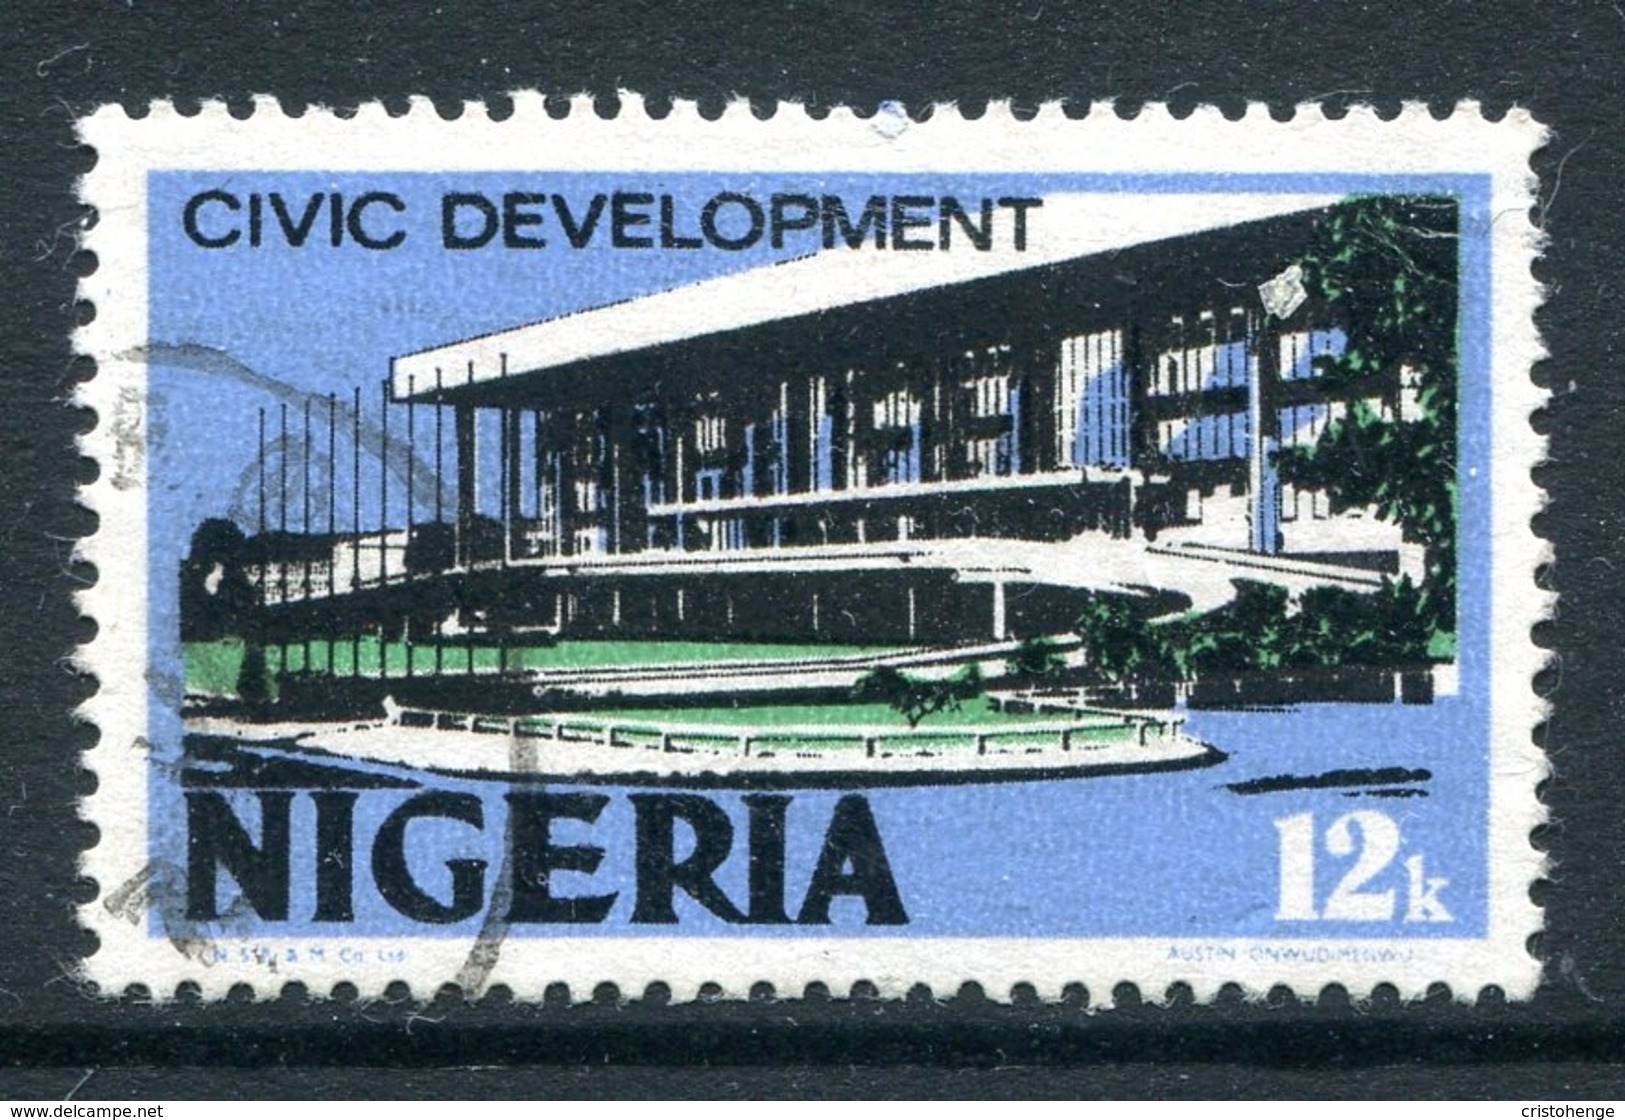 Nigeria 1973-74 Pictorials - Photo. - 12k Civic Development Used (SG 284) - Nigeria (1961-...)